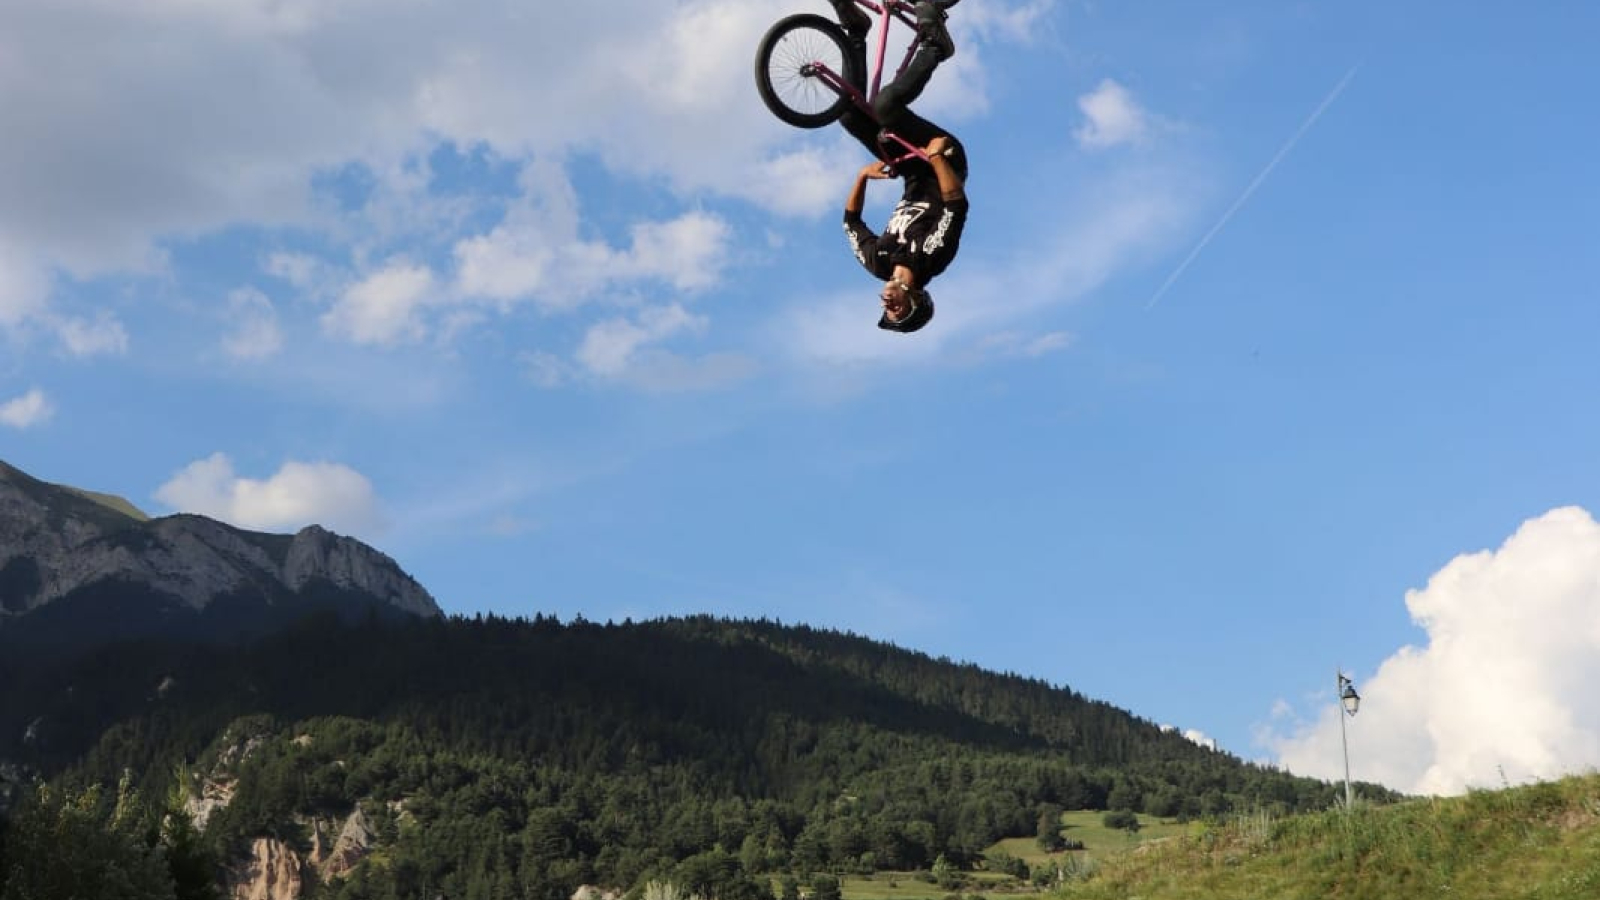 Mountain bike jump on the big air bag